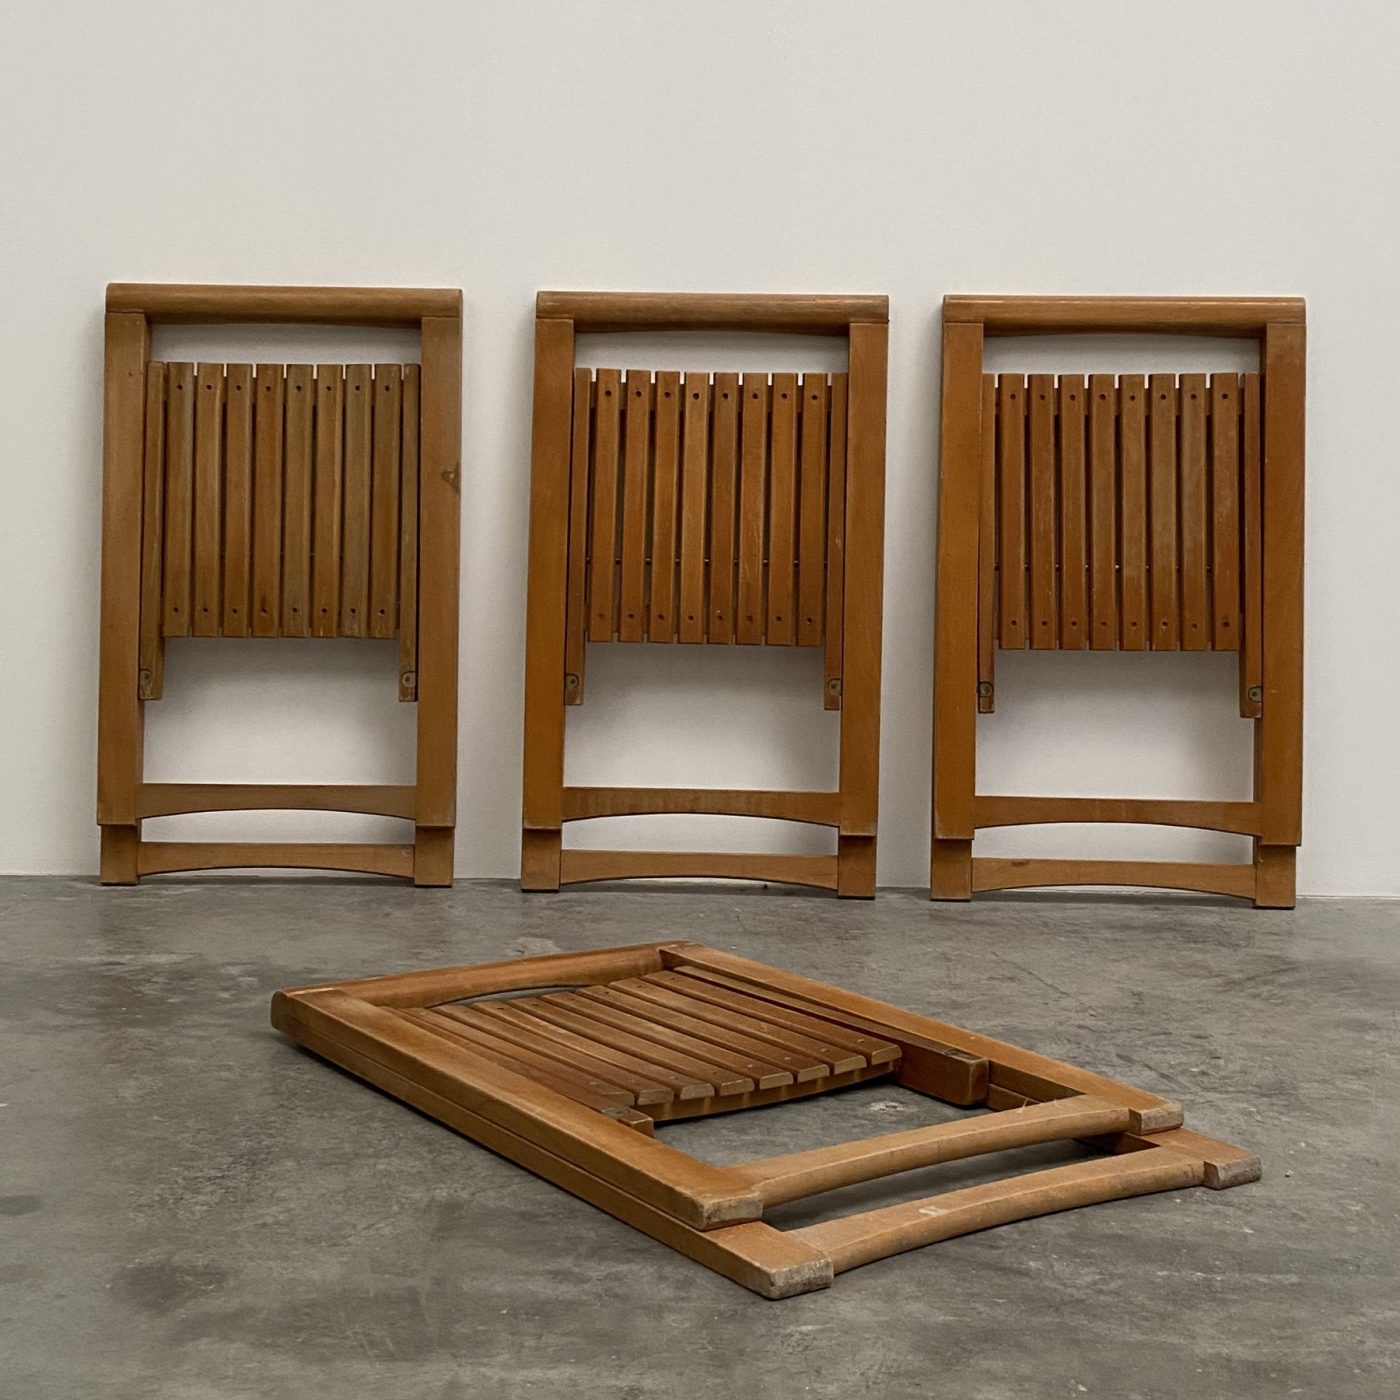 objet-vagabond-folding-chairs0001